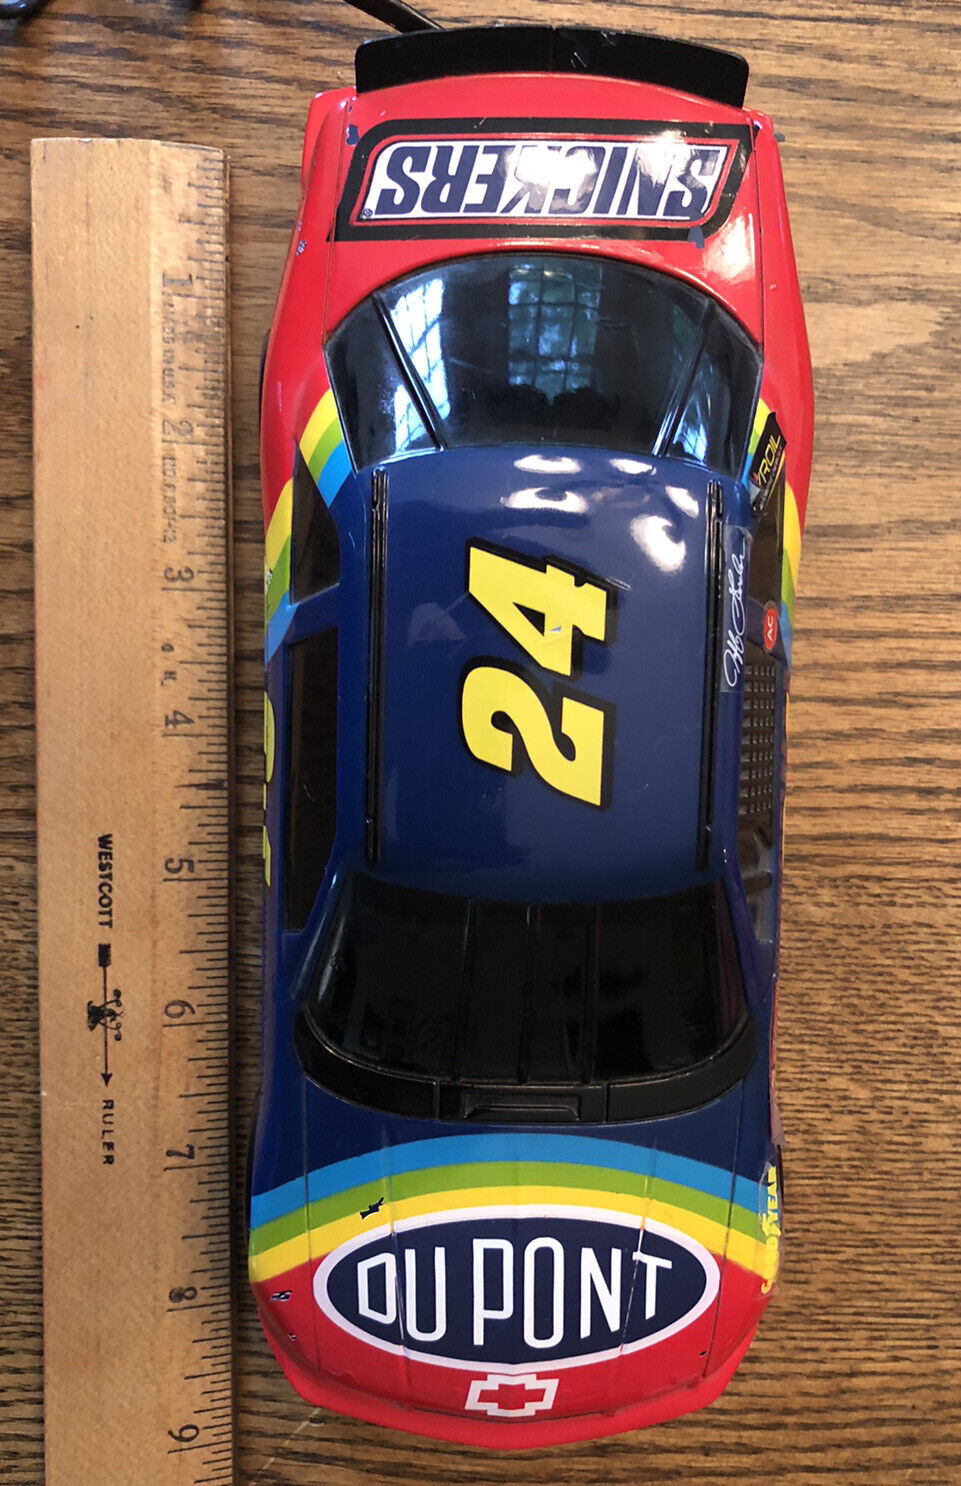 Jeff Gordon Land Line Button Nascar Race Car Telephone Phone Dupont #24 eBay